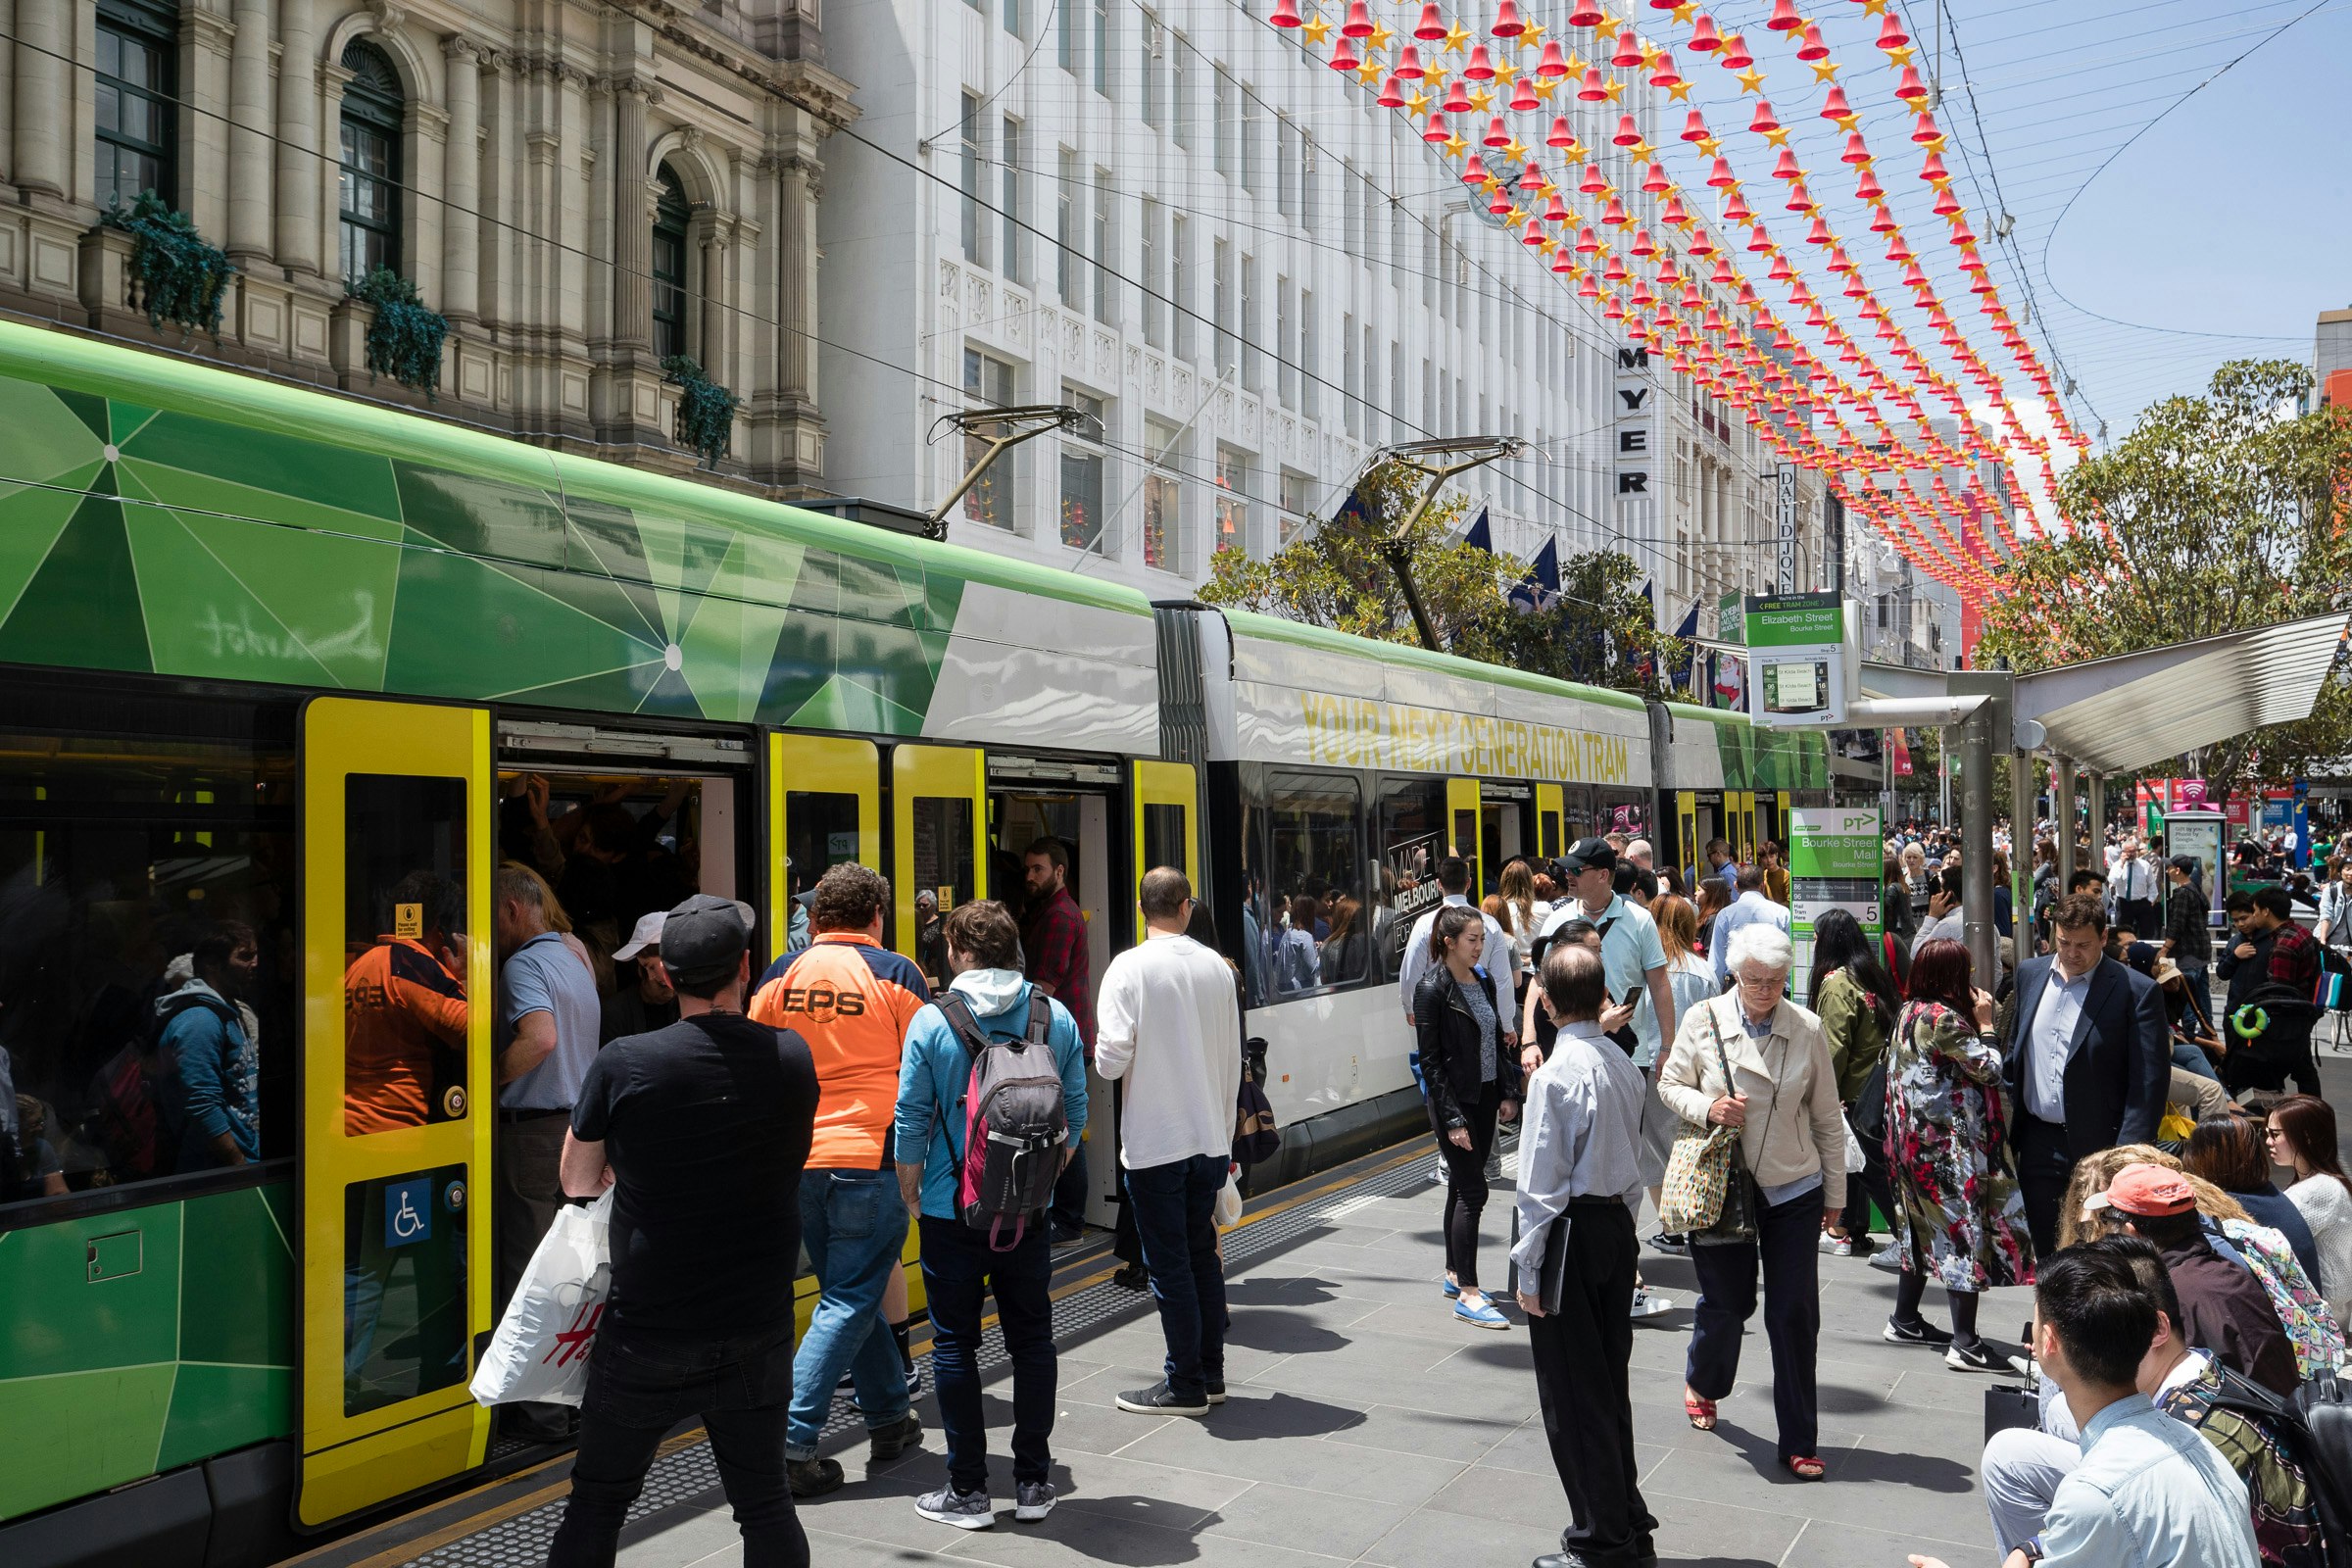 Yarra Trams handles over 200 million passengers per year.